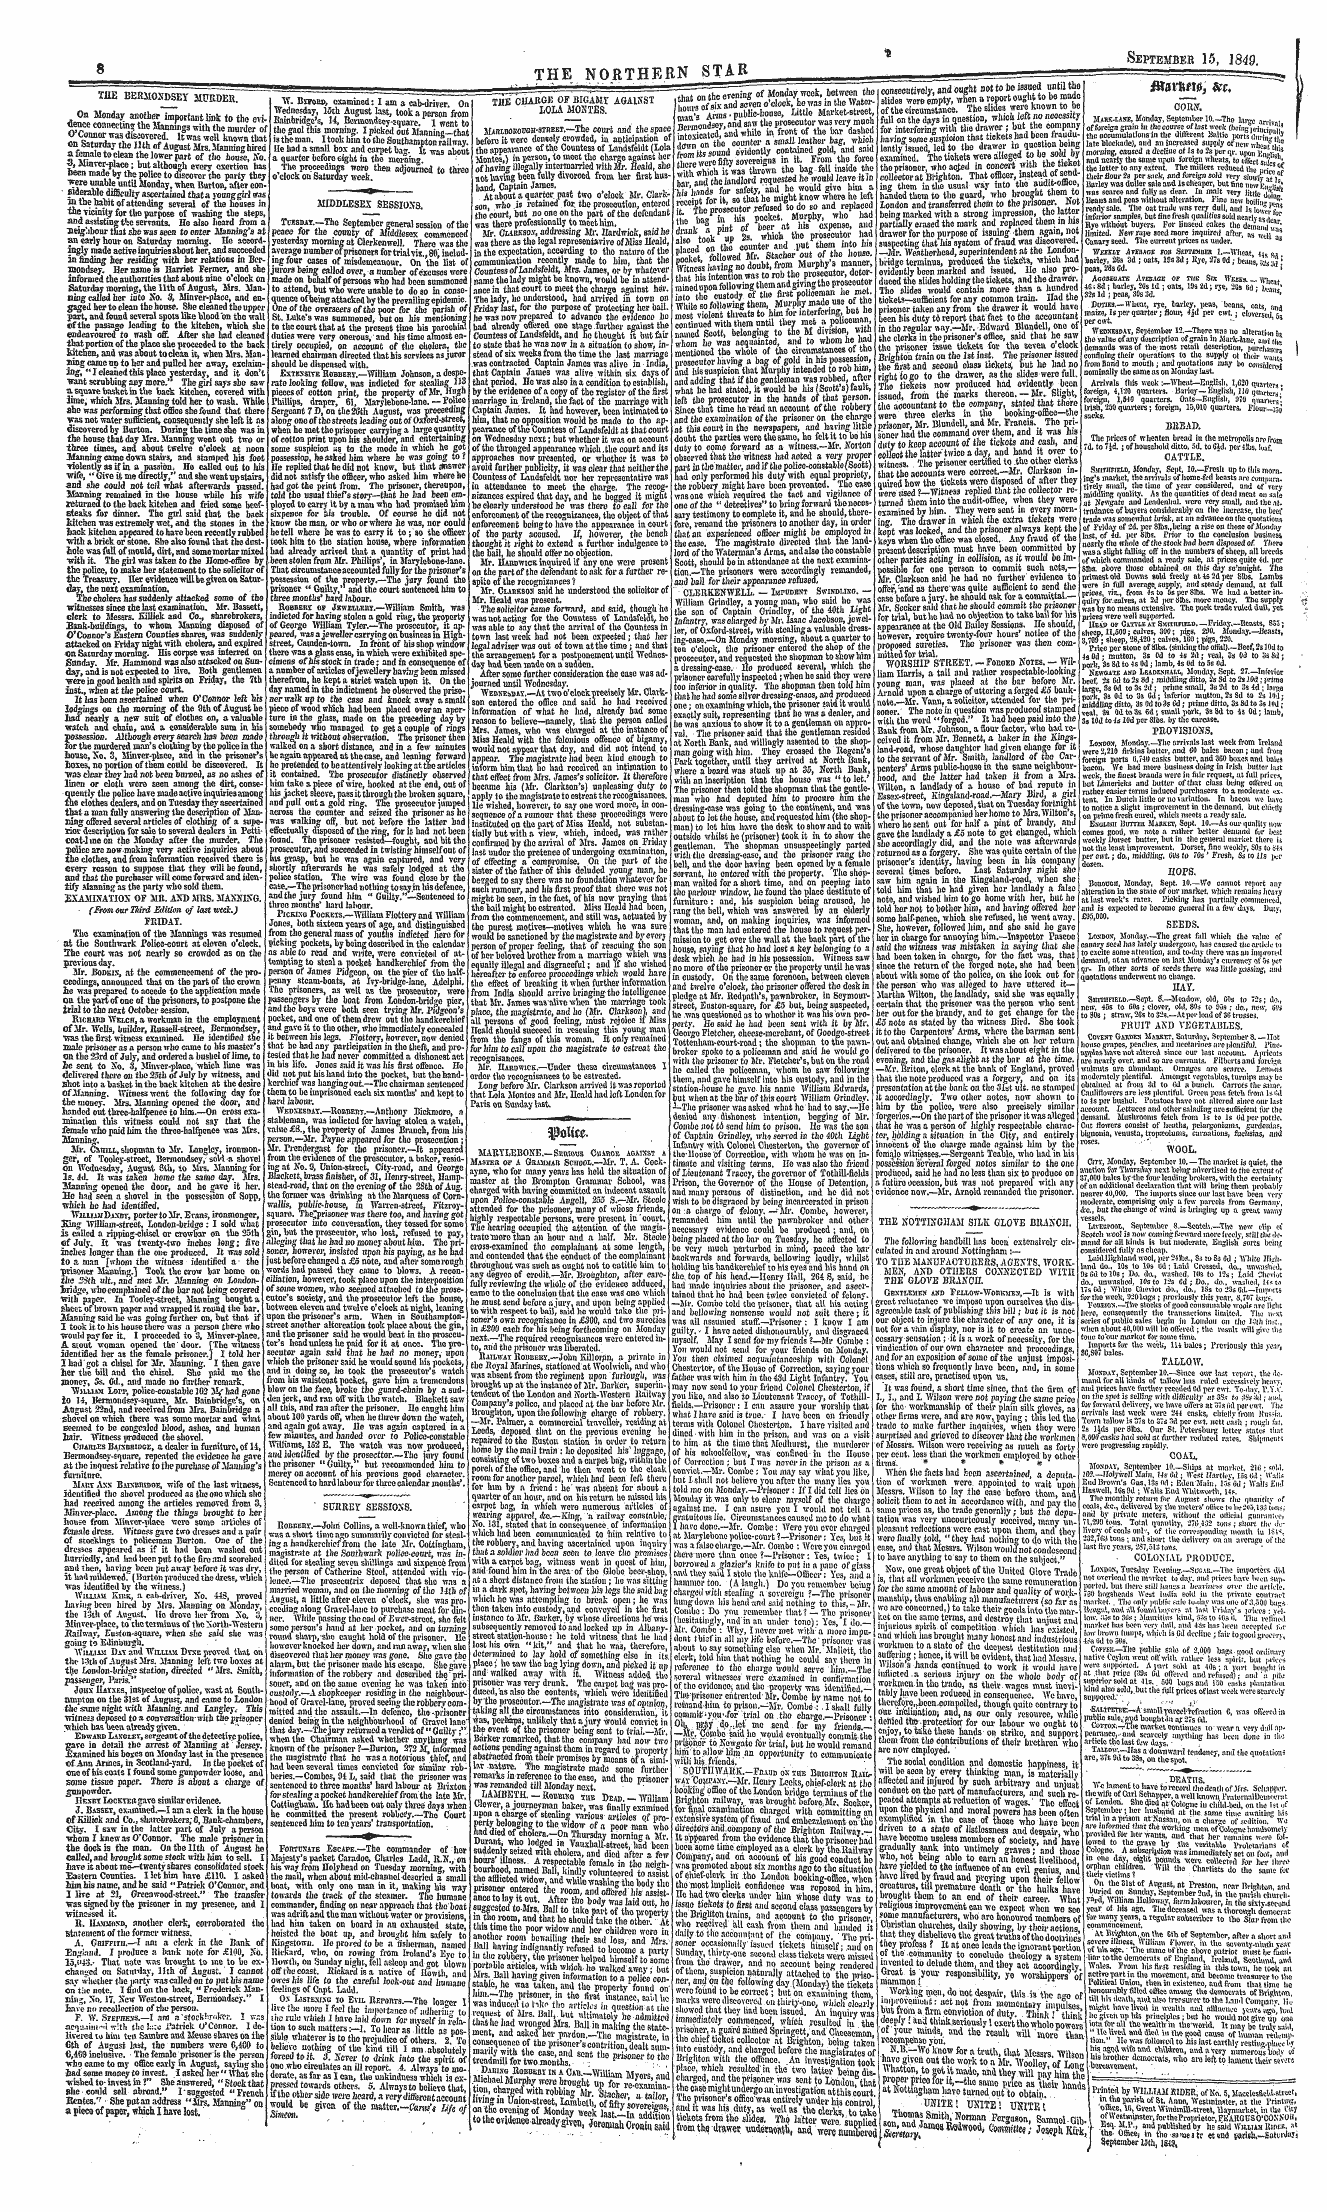 Northern Star (1837-1852): jS F Y, 2nd edition - Ihat*&N0, &C